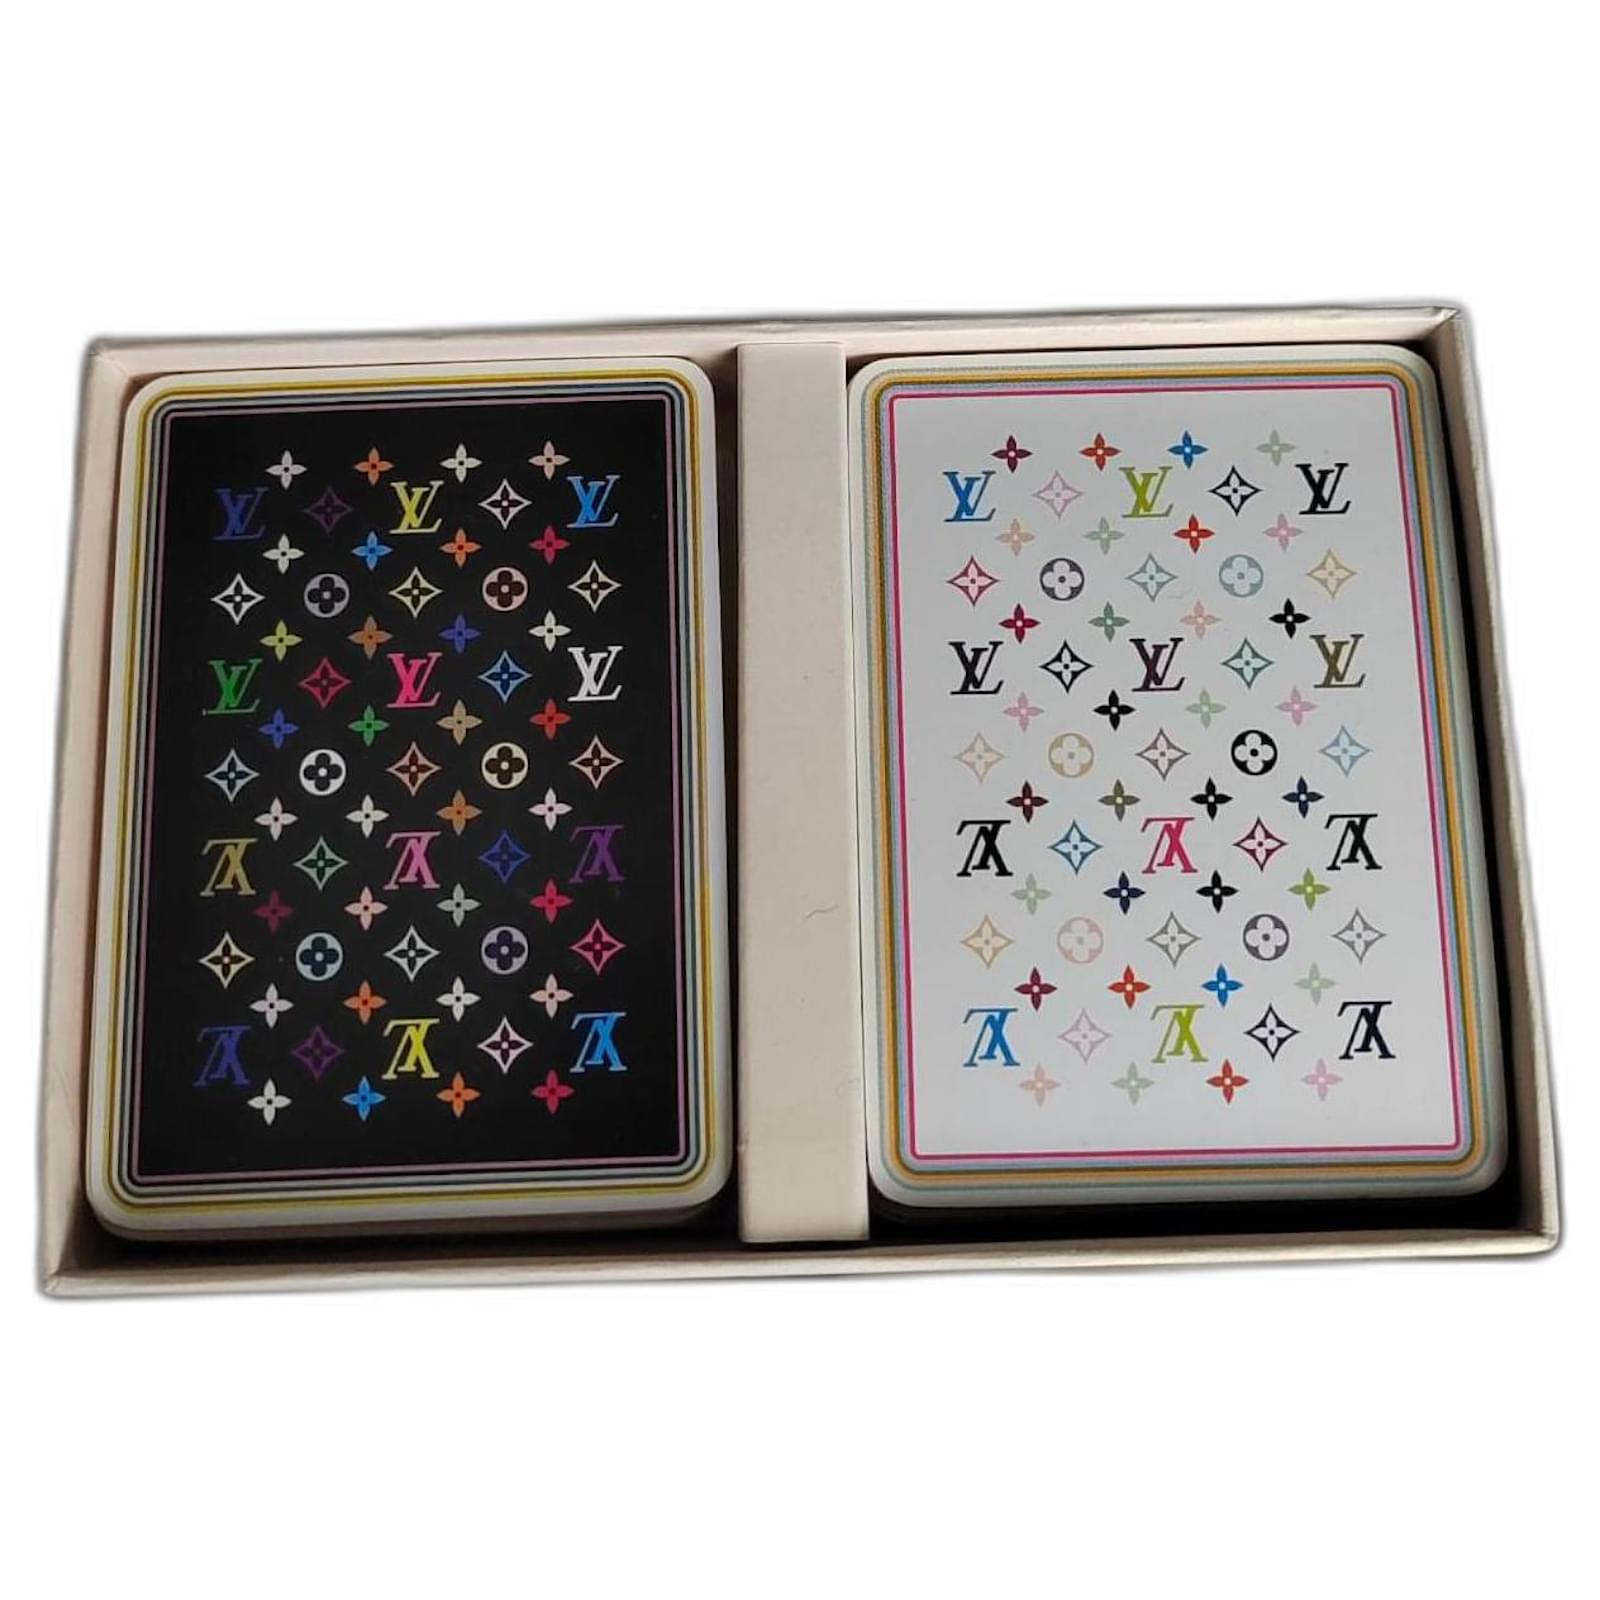 Louis Vuitton - Murakami Multicolor Playing Cards